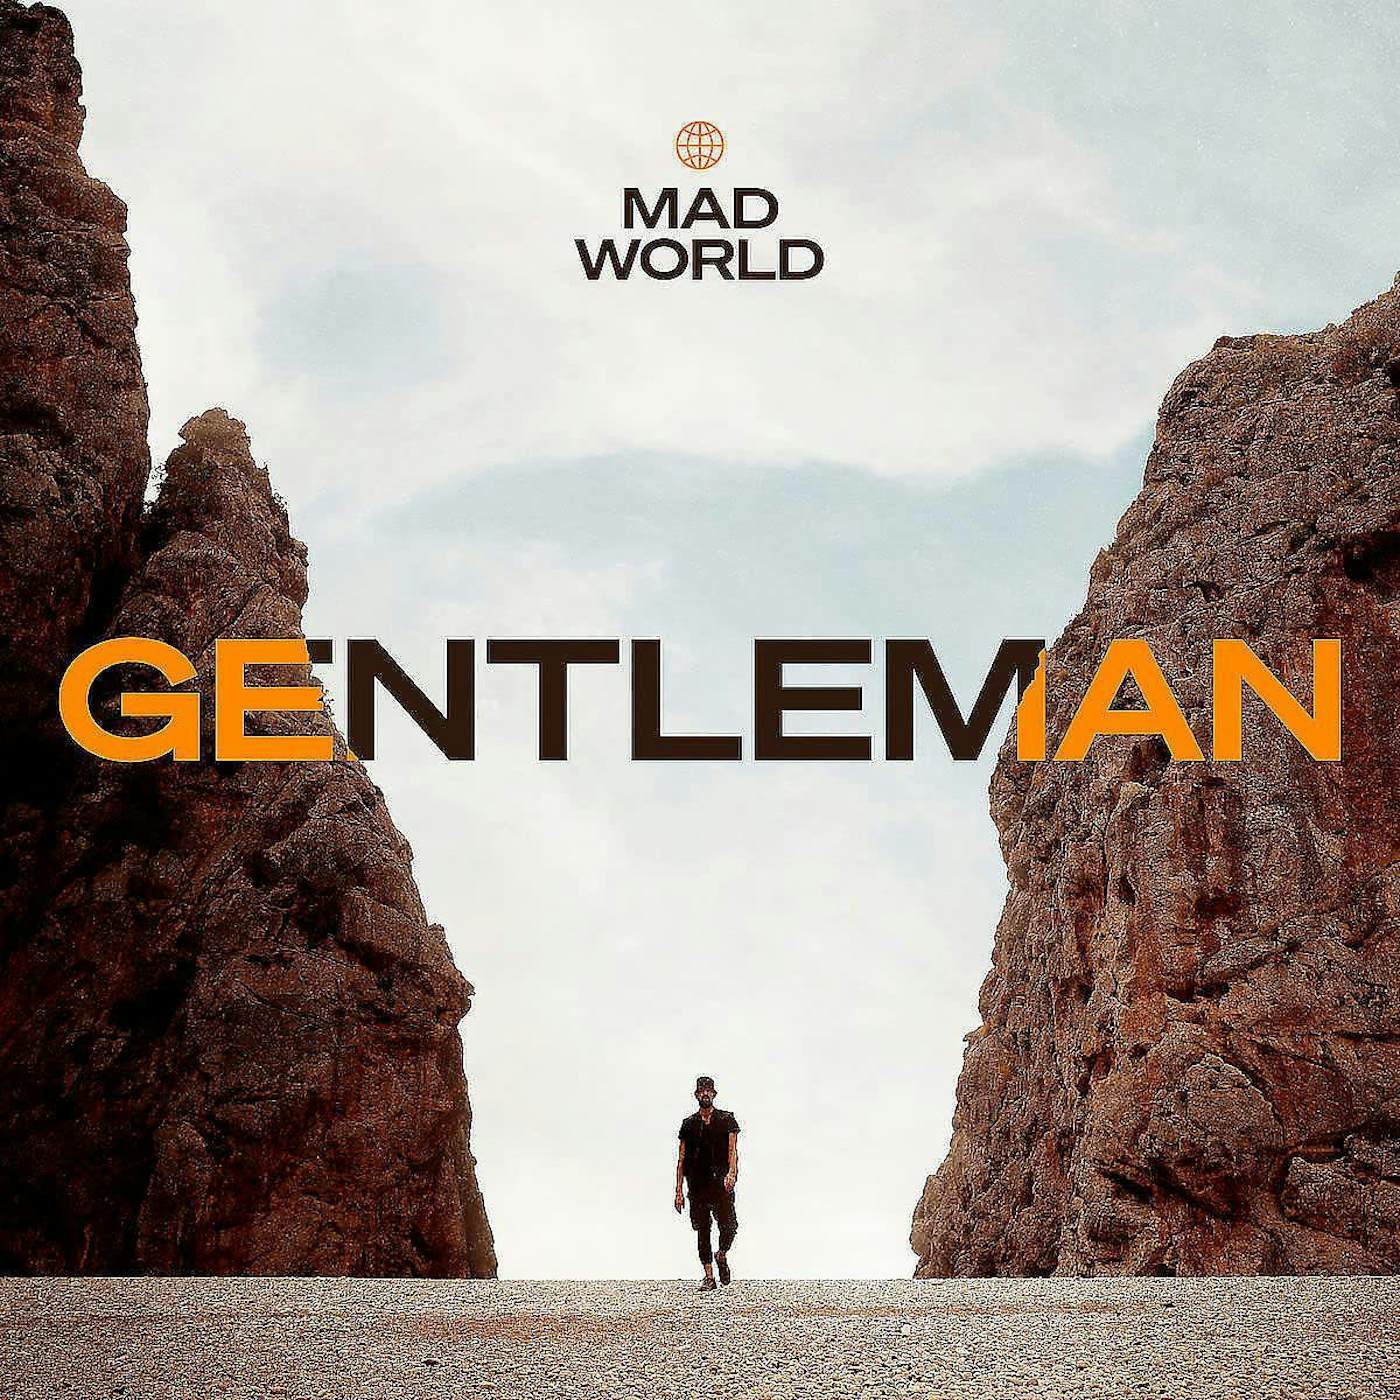 Gentleman Mad World Vinyl Record